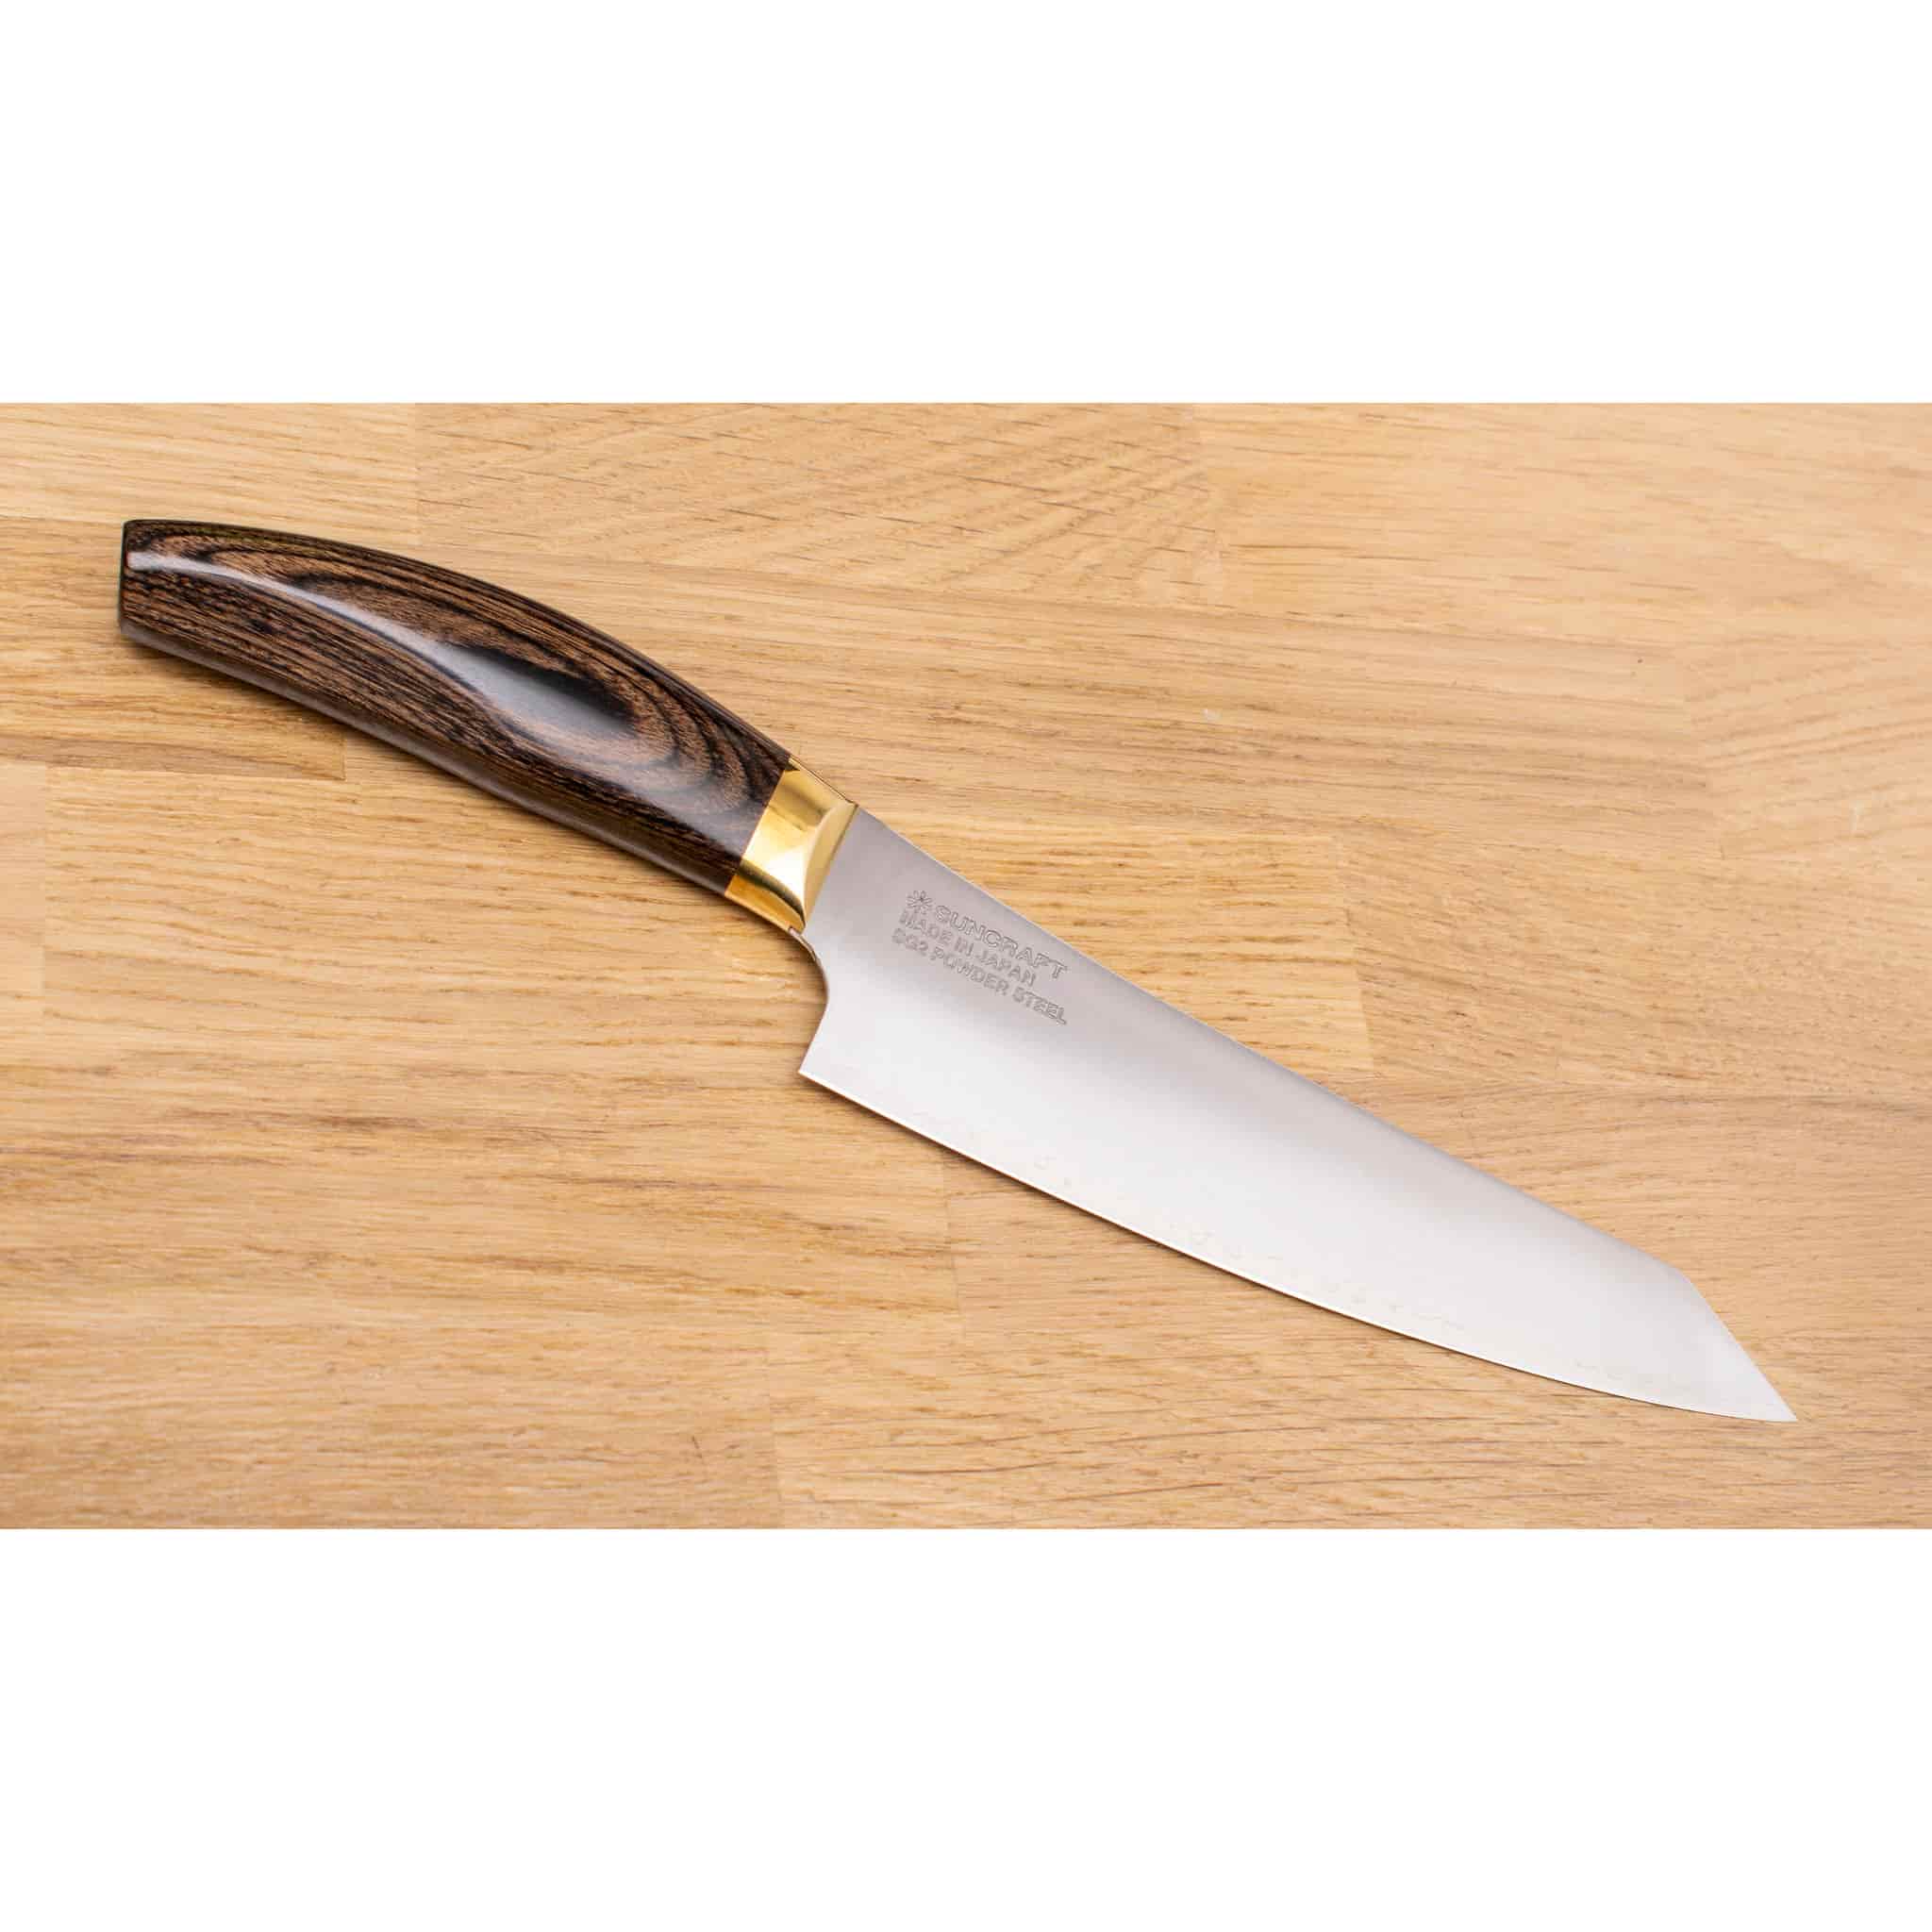 Seki 3 Layer Utility Knife 15cm